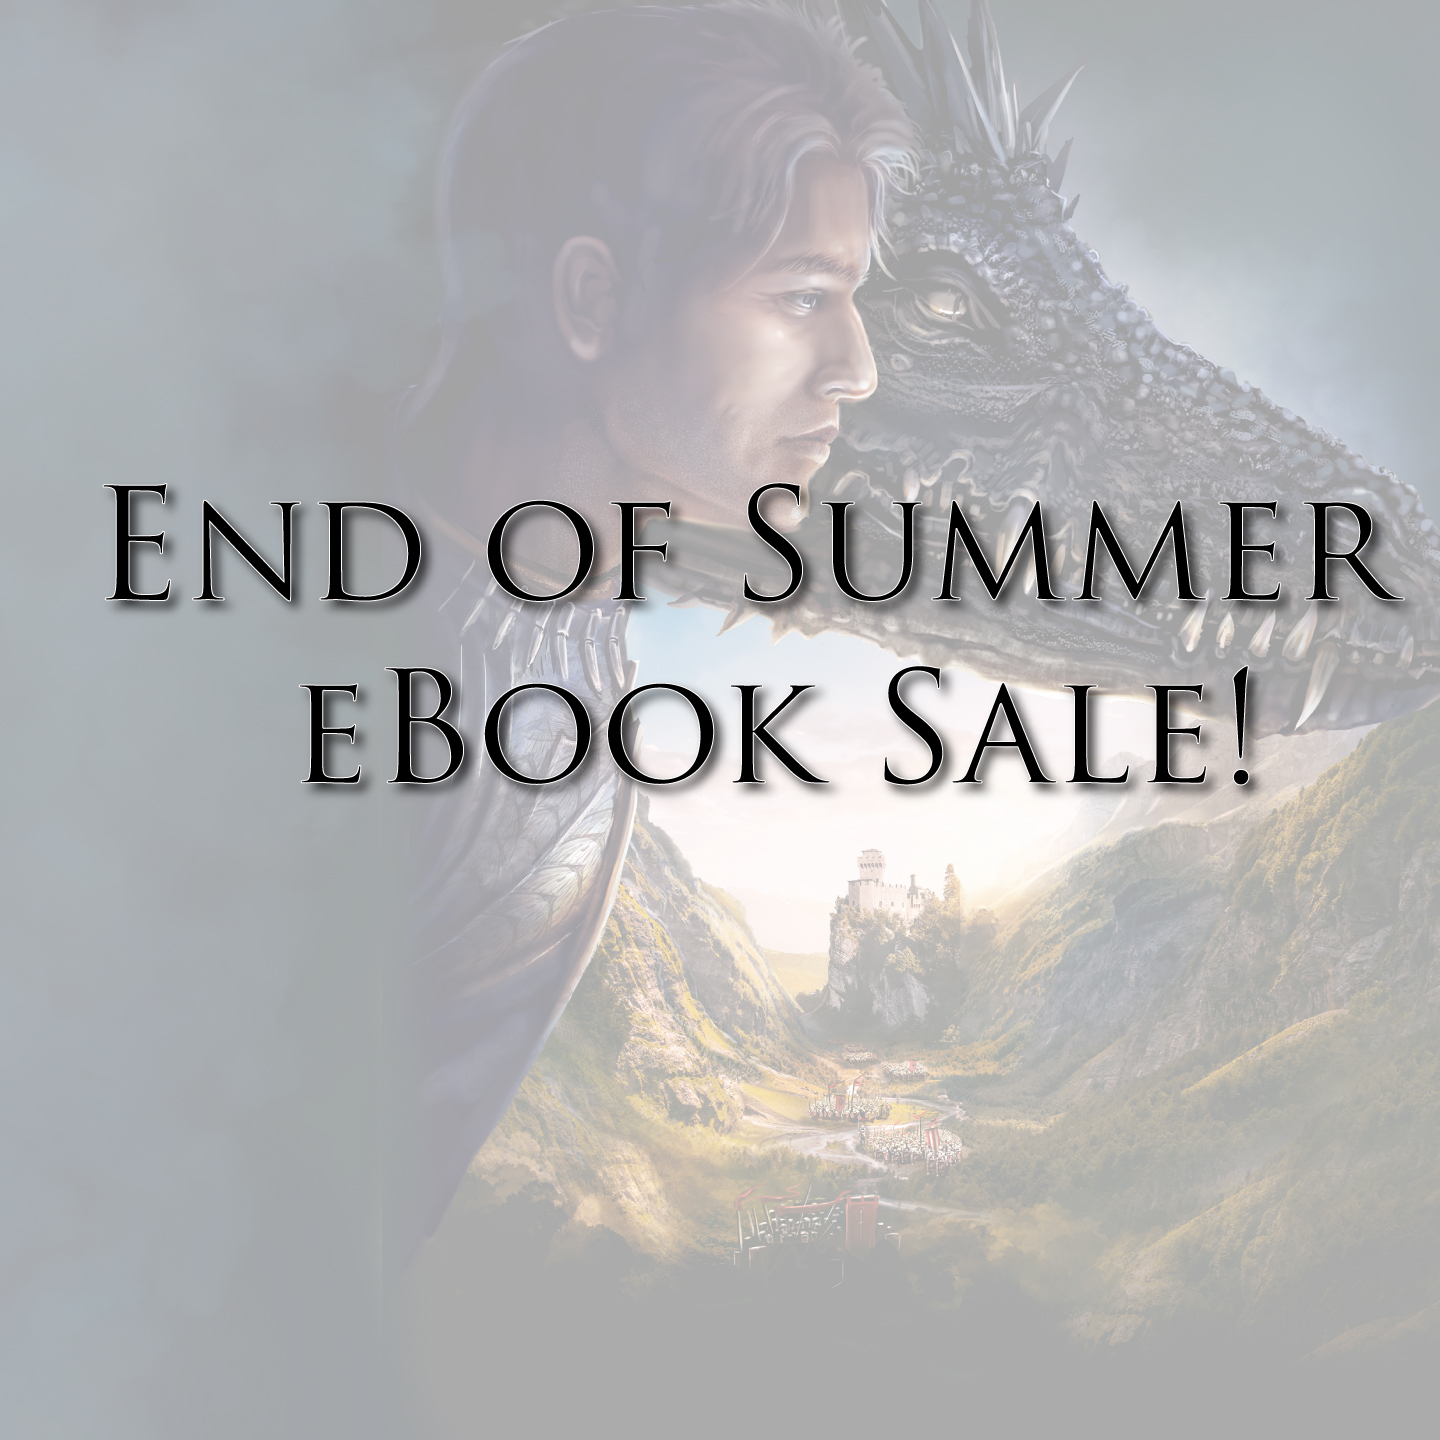 End of Summer eBook Sale!